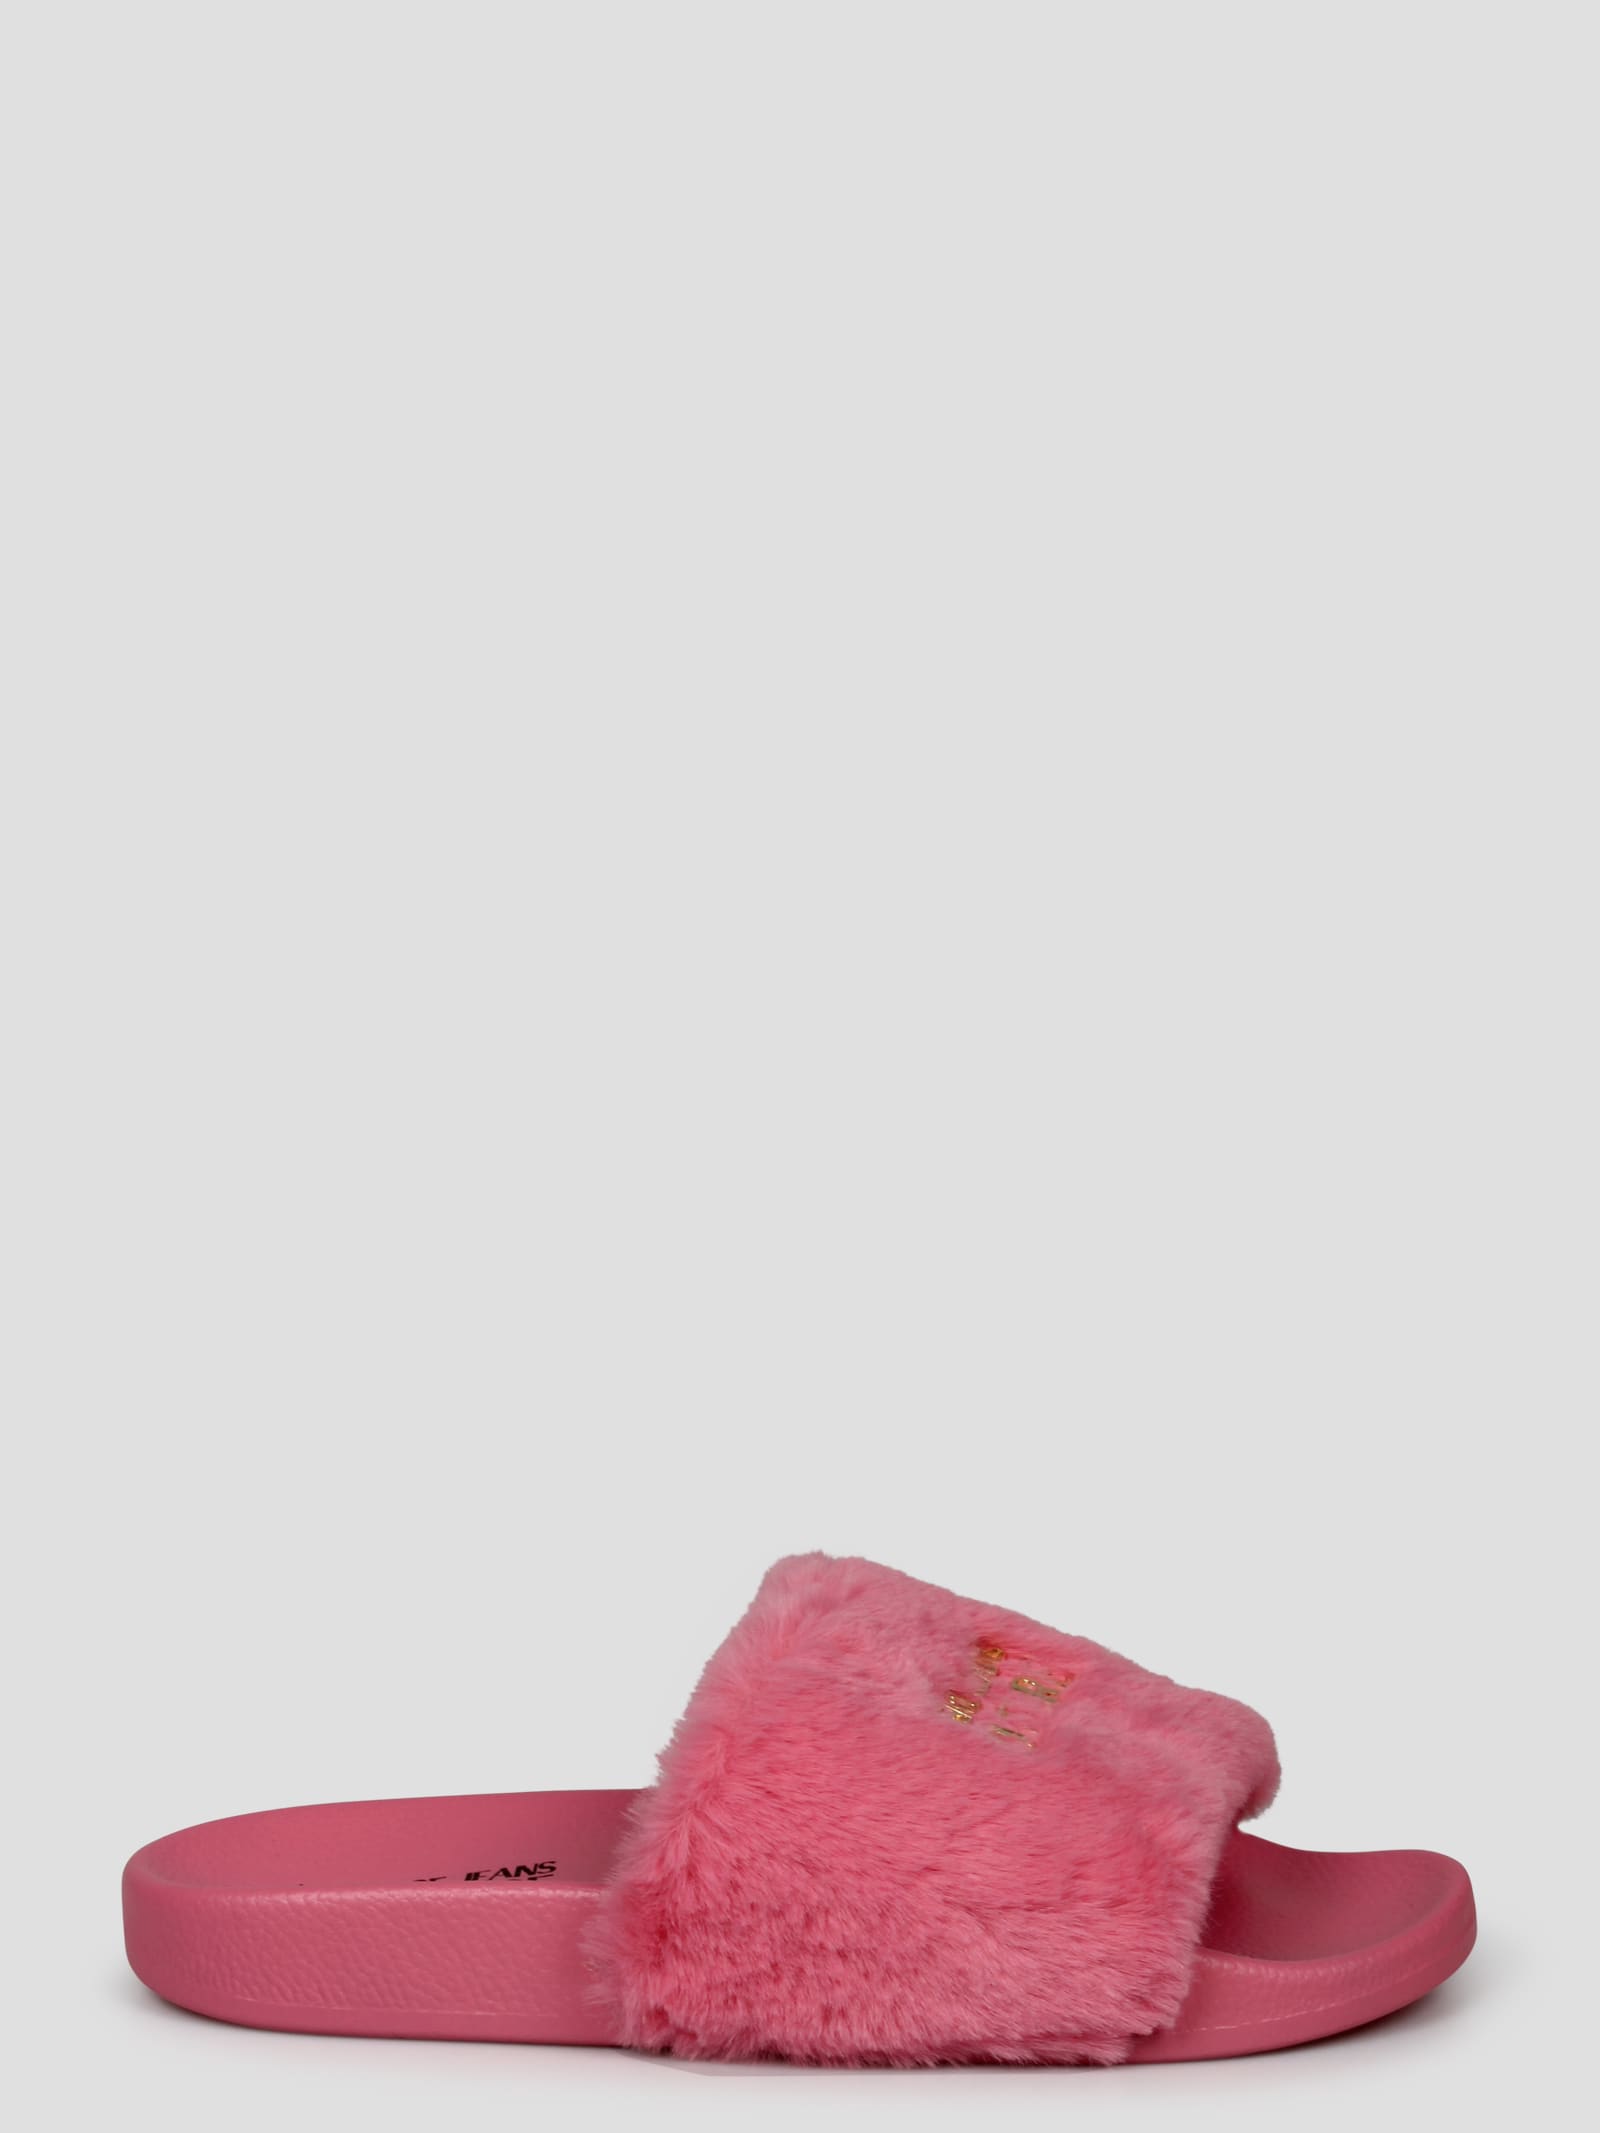 VERSACE JEANS RANGE F - COUTURE 01 WOMEN''S BAG (Dimensions: 19.6 x 6 x 14  cm) - Pink